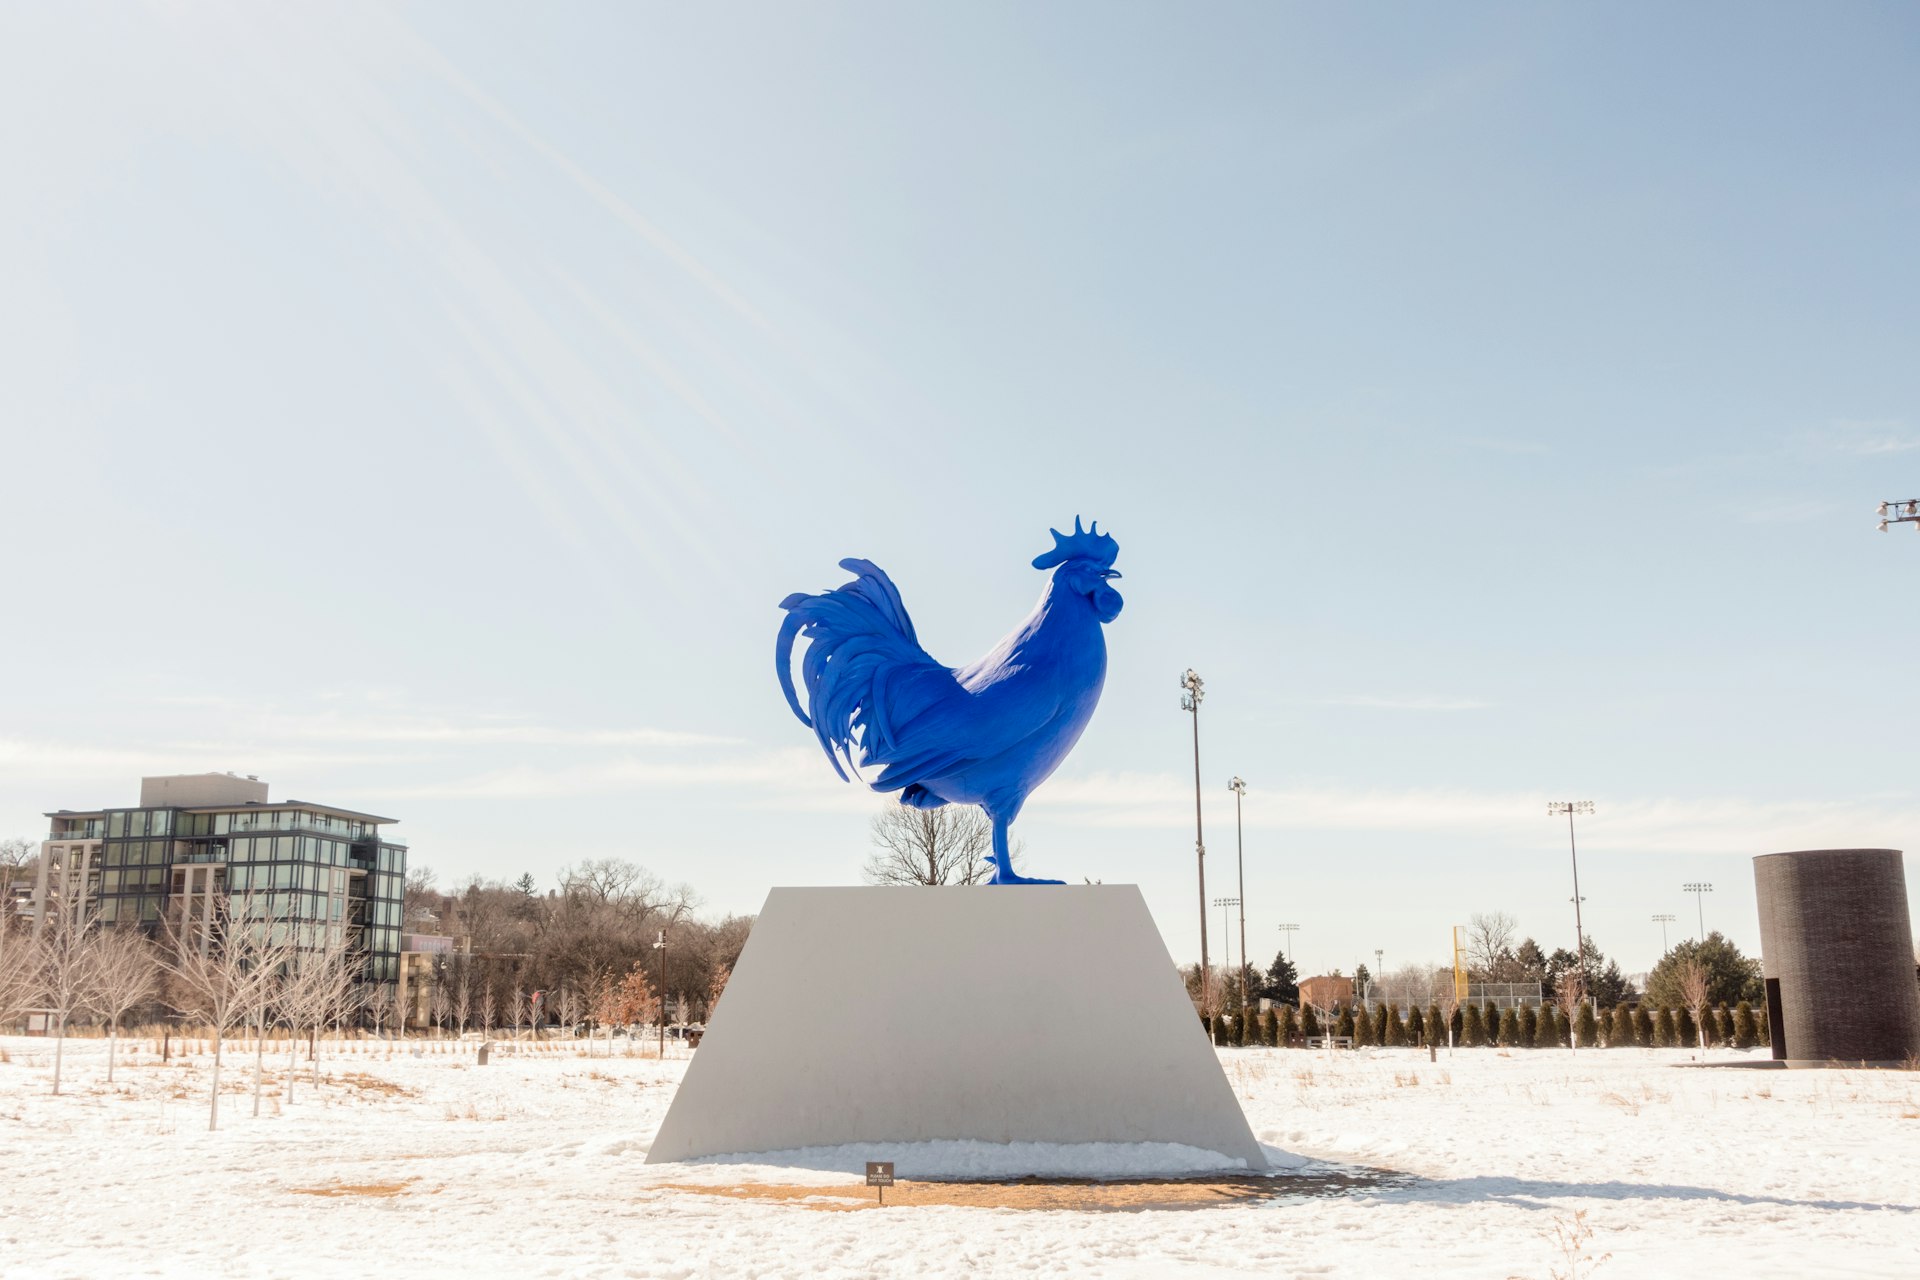 Blue cock on a white plinth at the Sculpture Park downtown Minneapolis Sculpture Garden